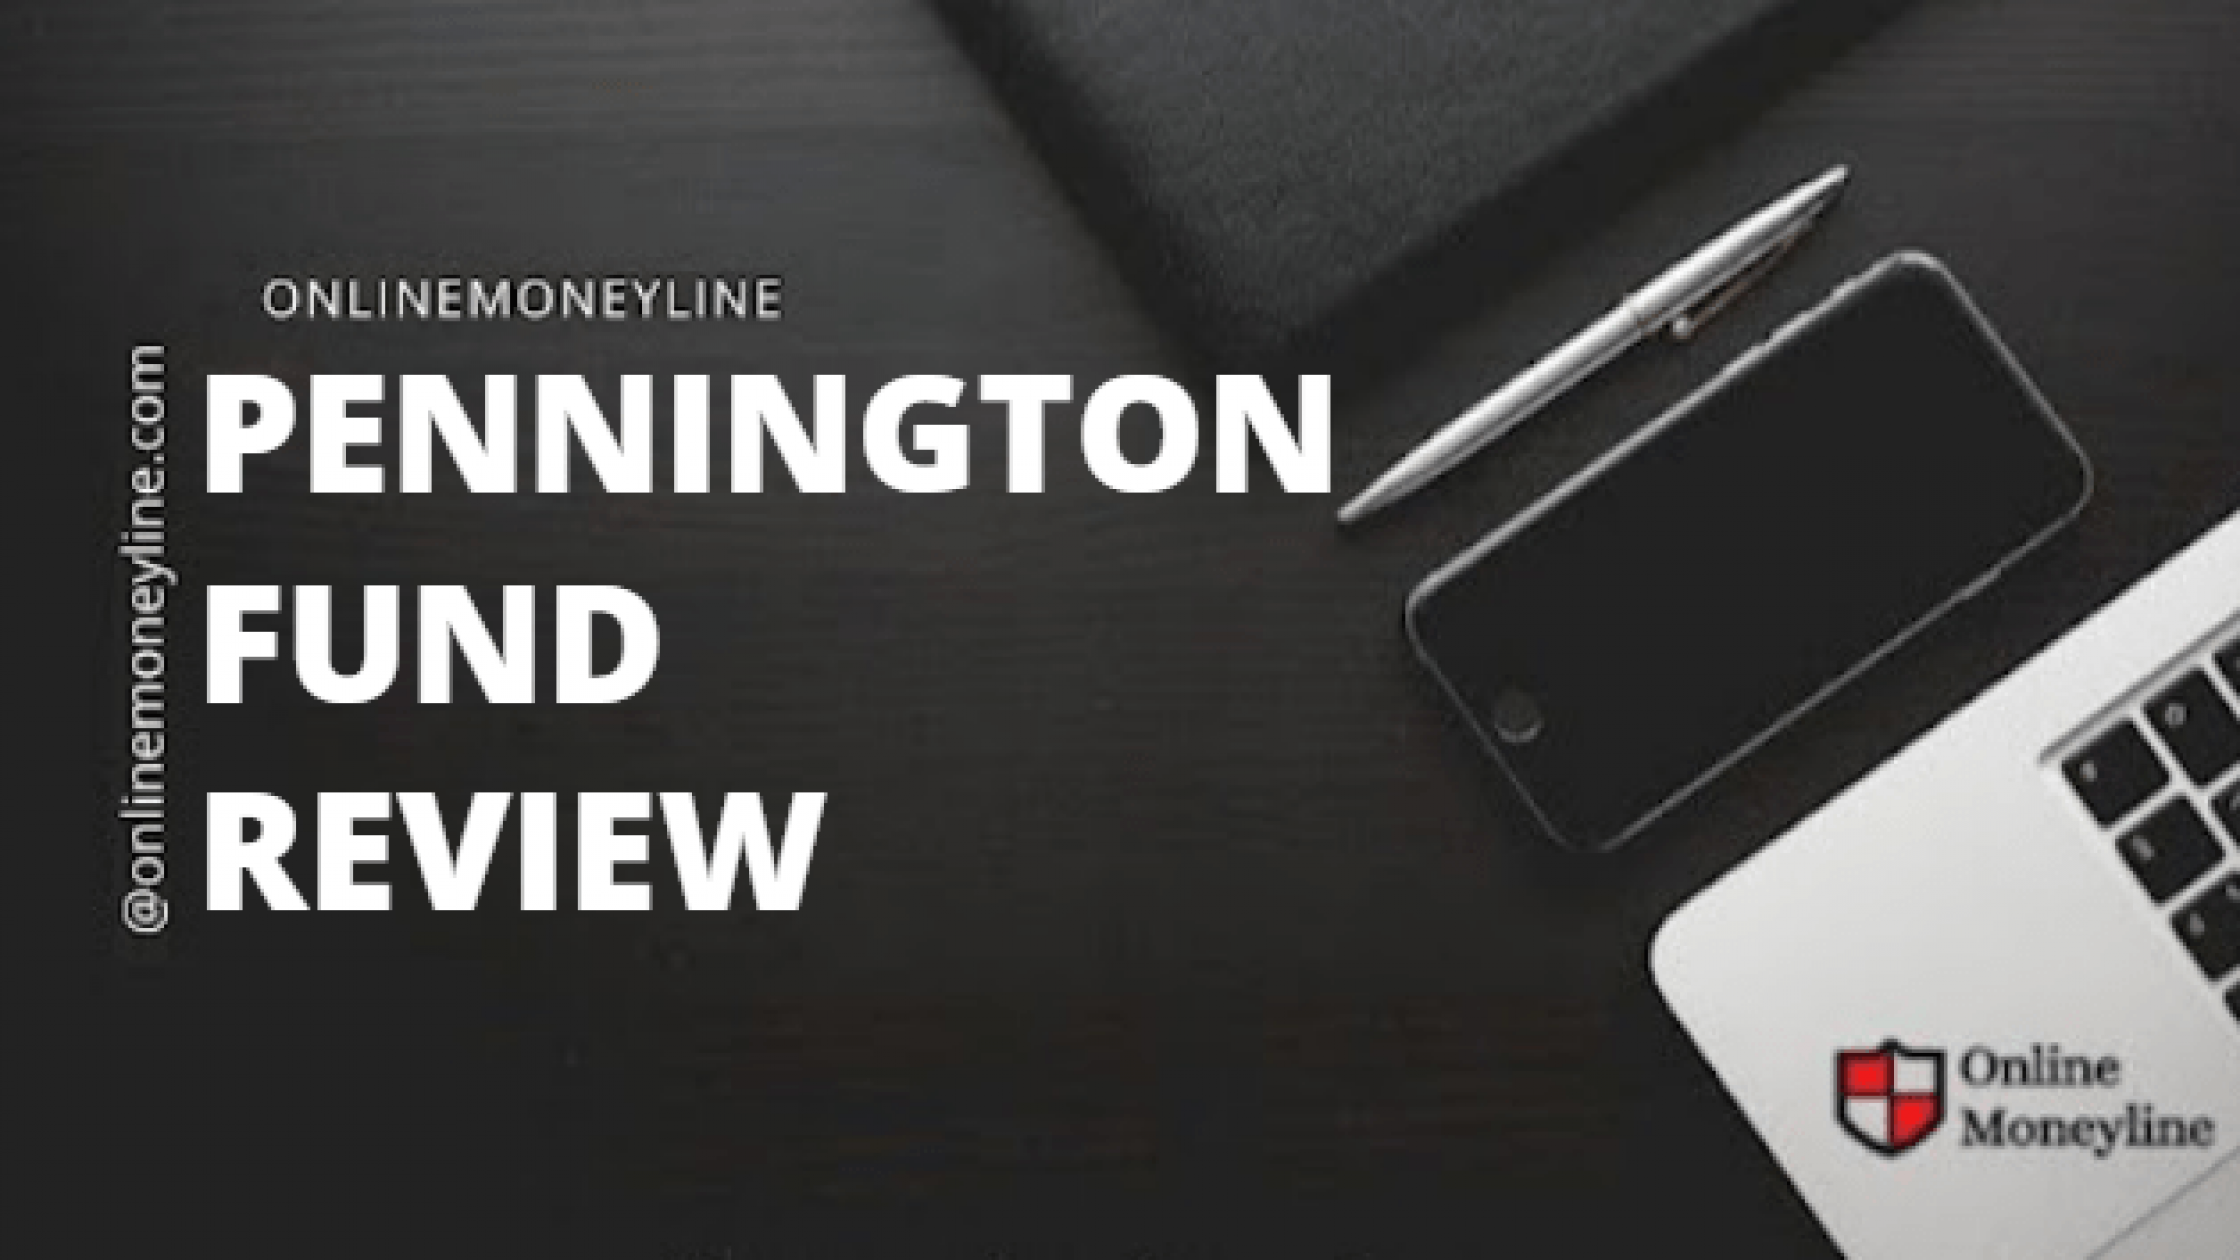 Pennington Fund Review